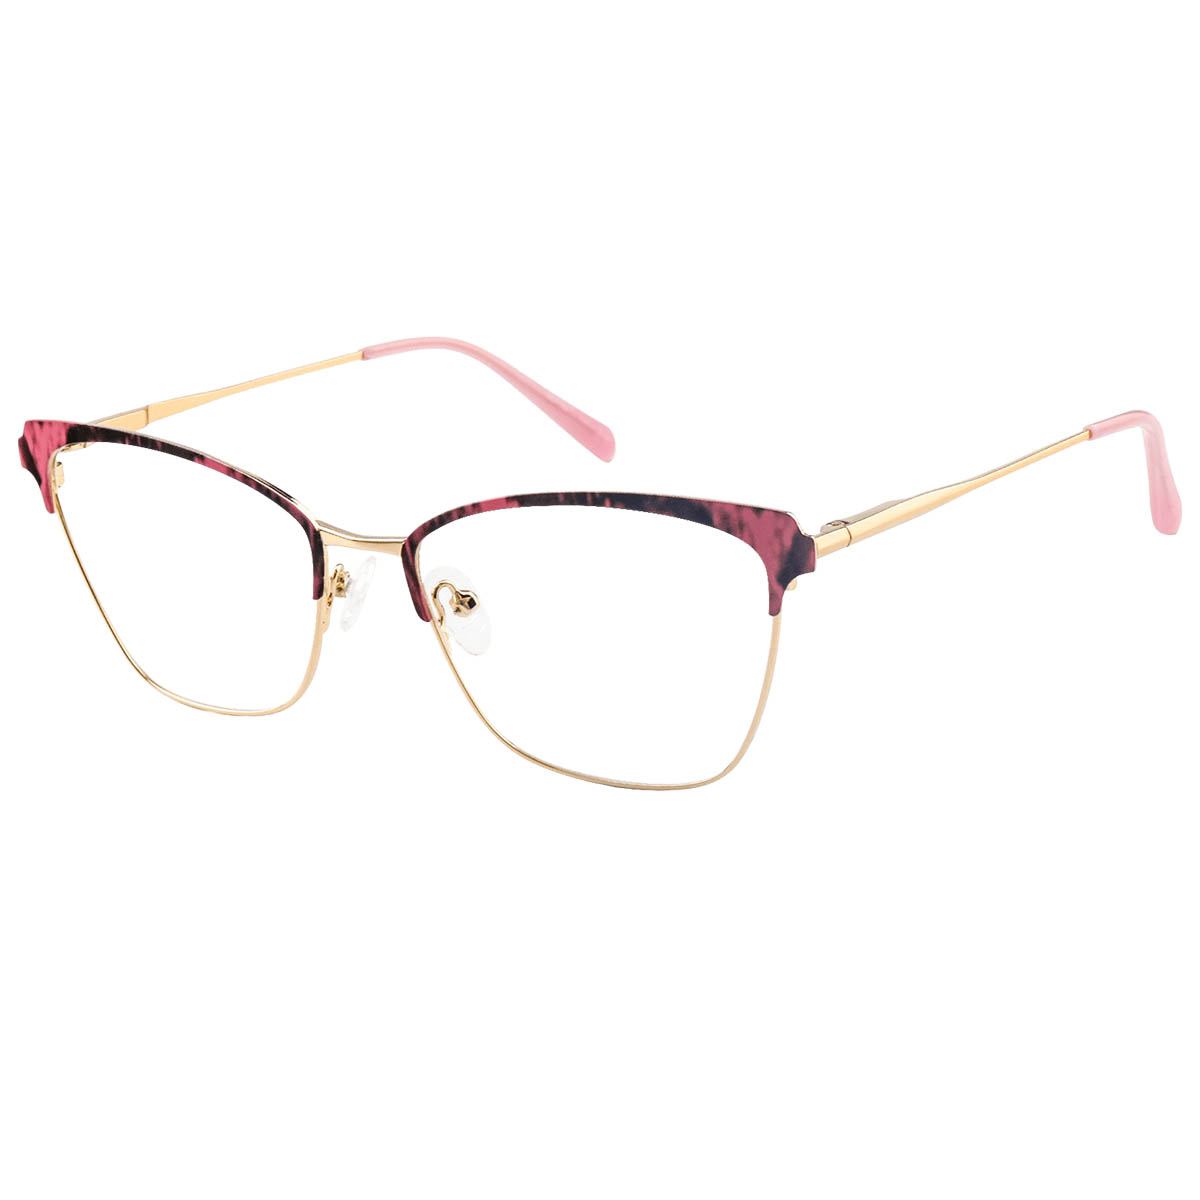 Cathleen - Square Pink Reading Glasses for Women